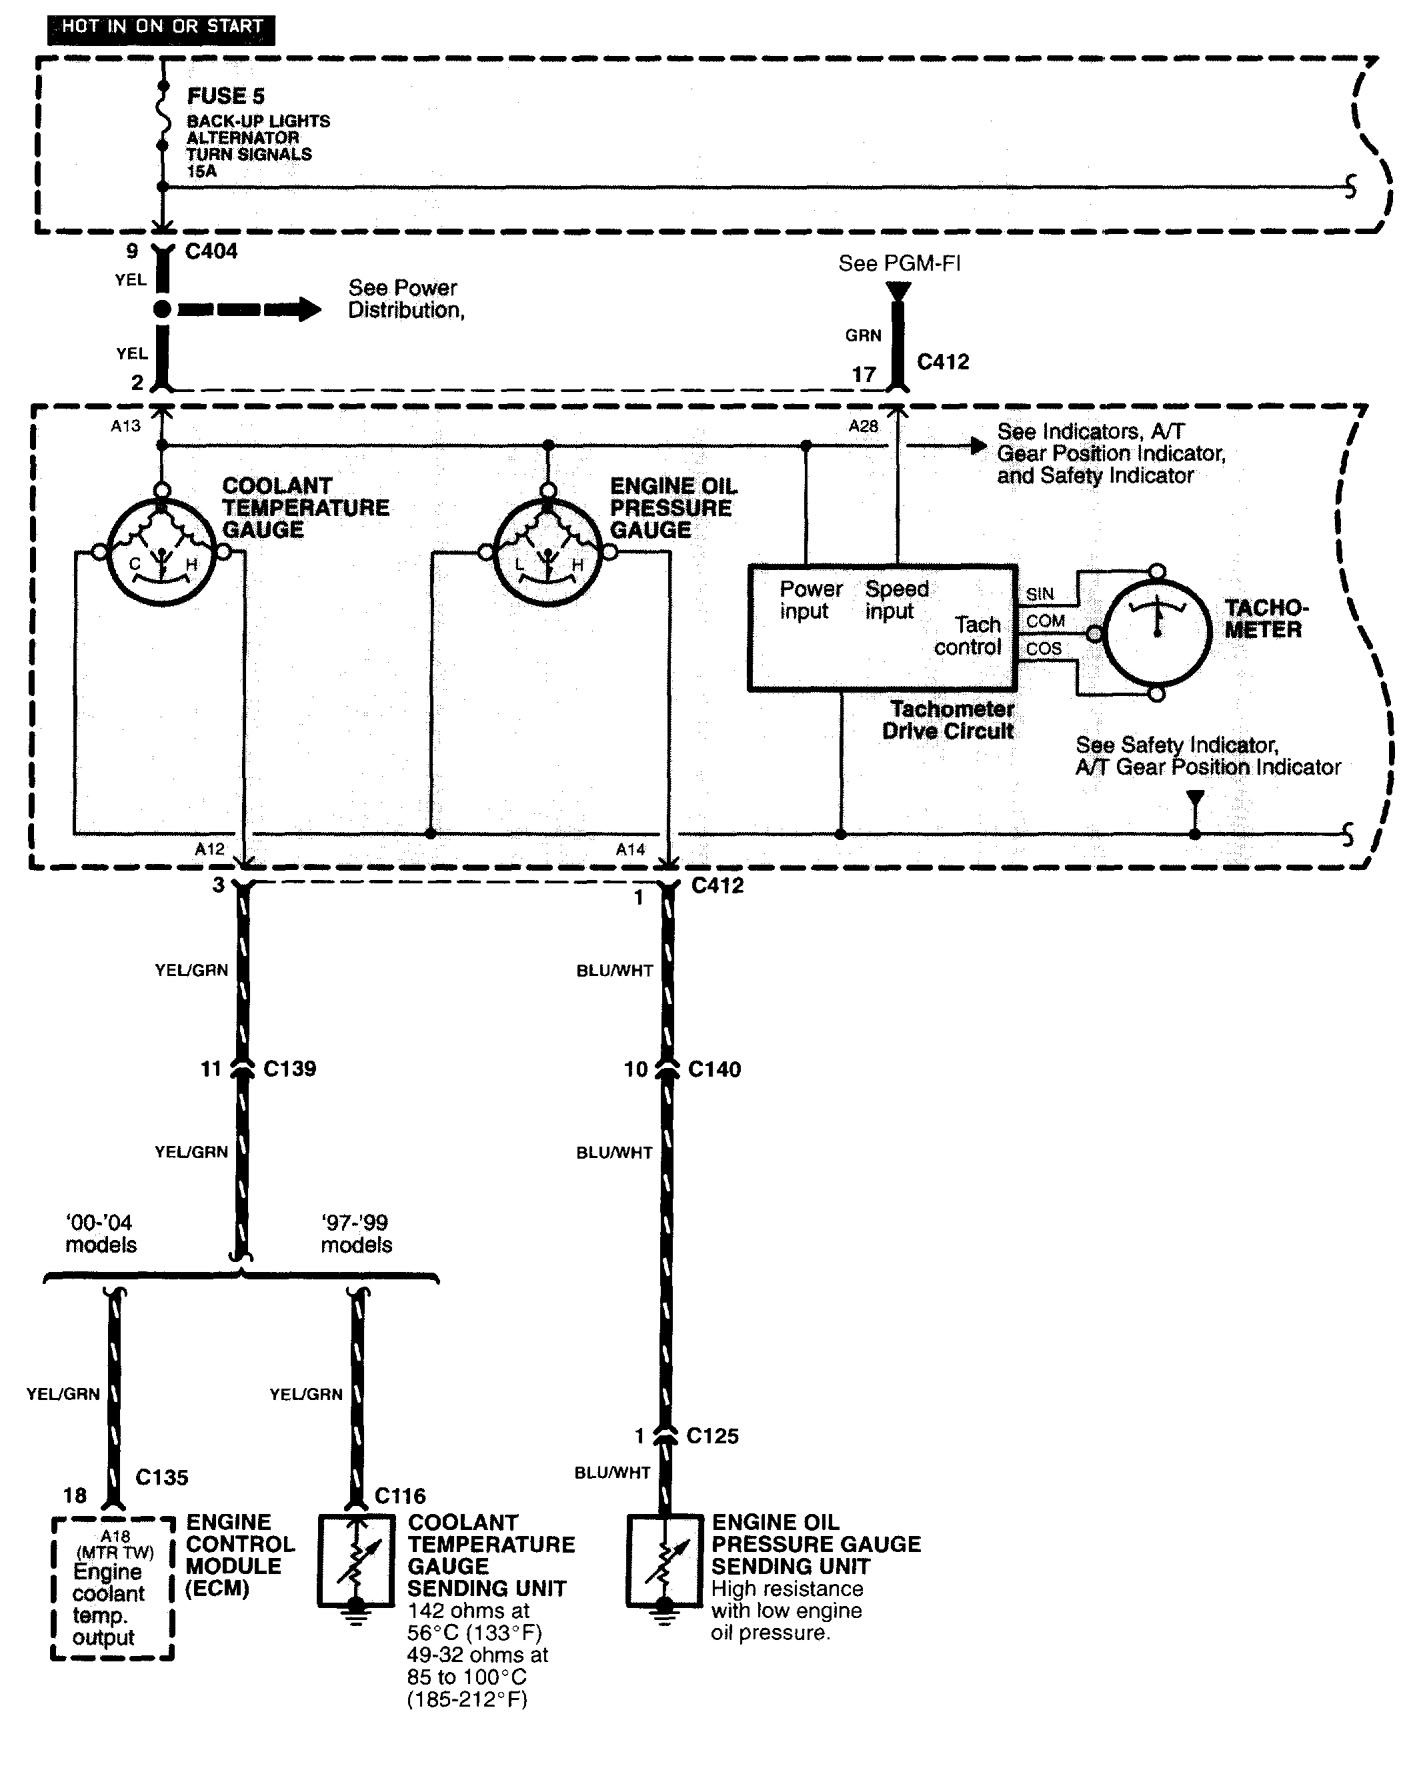 Acura Mdx Wiring Diagram - Wiring Diagram Networks